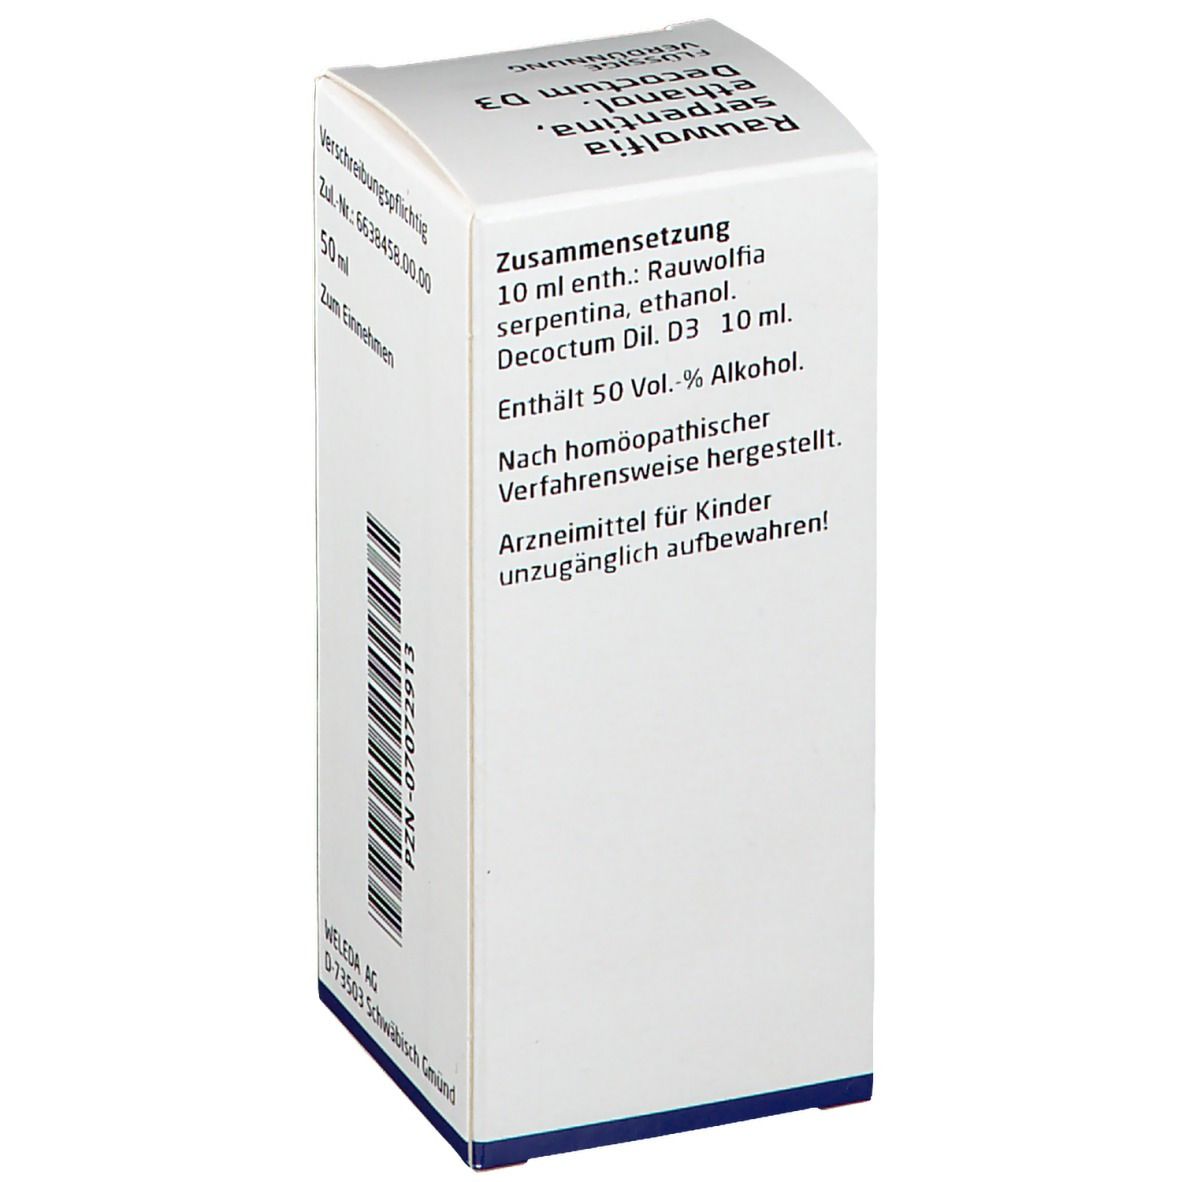 Rauwolfia serpentina, ethanol. Decoctum D3